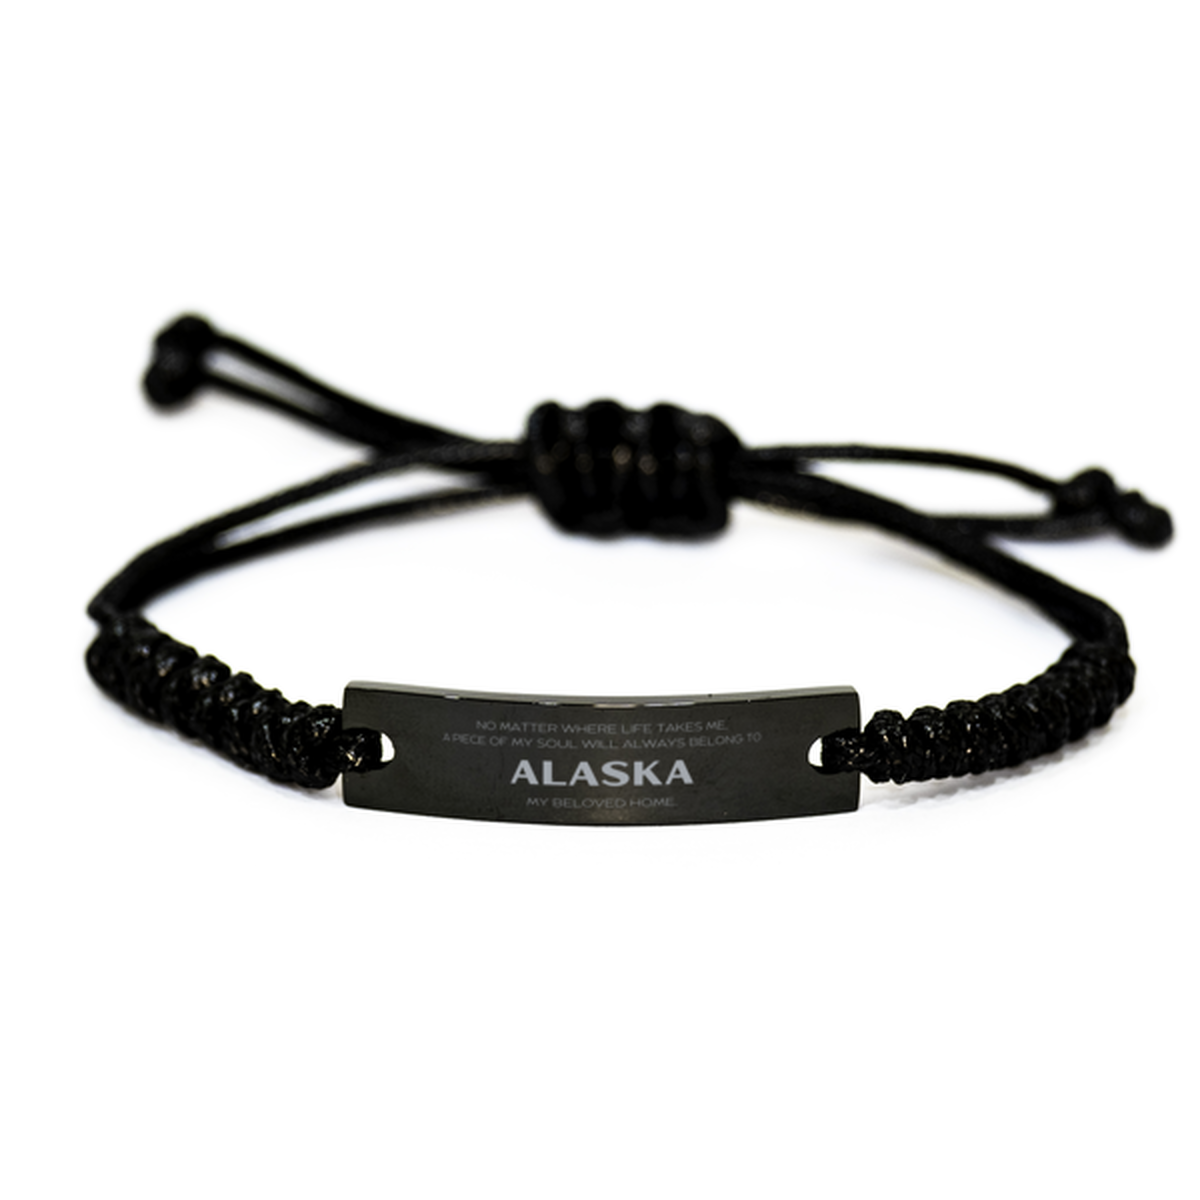 Love Alaska State Gifts, My soul will always belong to Alaska, Proud Black Rope Bracelet, Birthday Unique Gifts For Alaska Men, Women, Friends